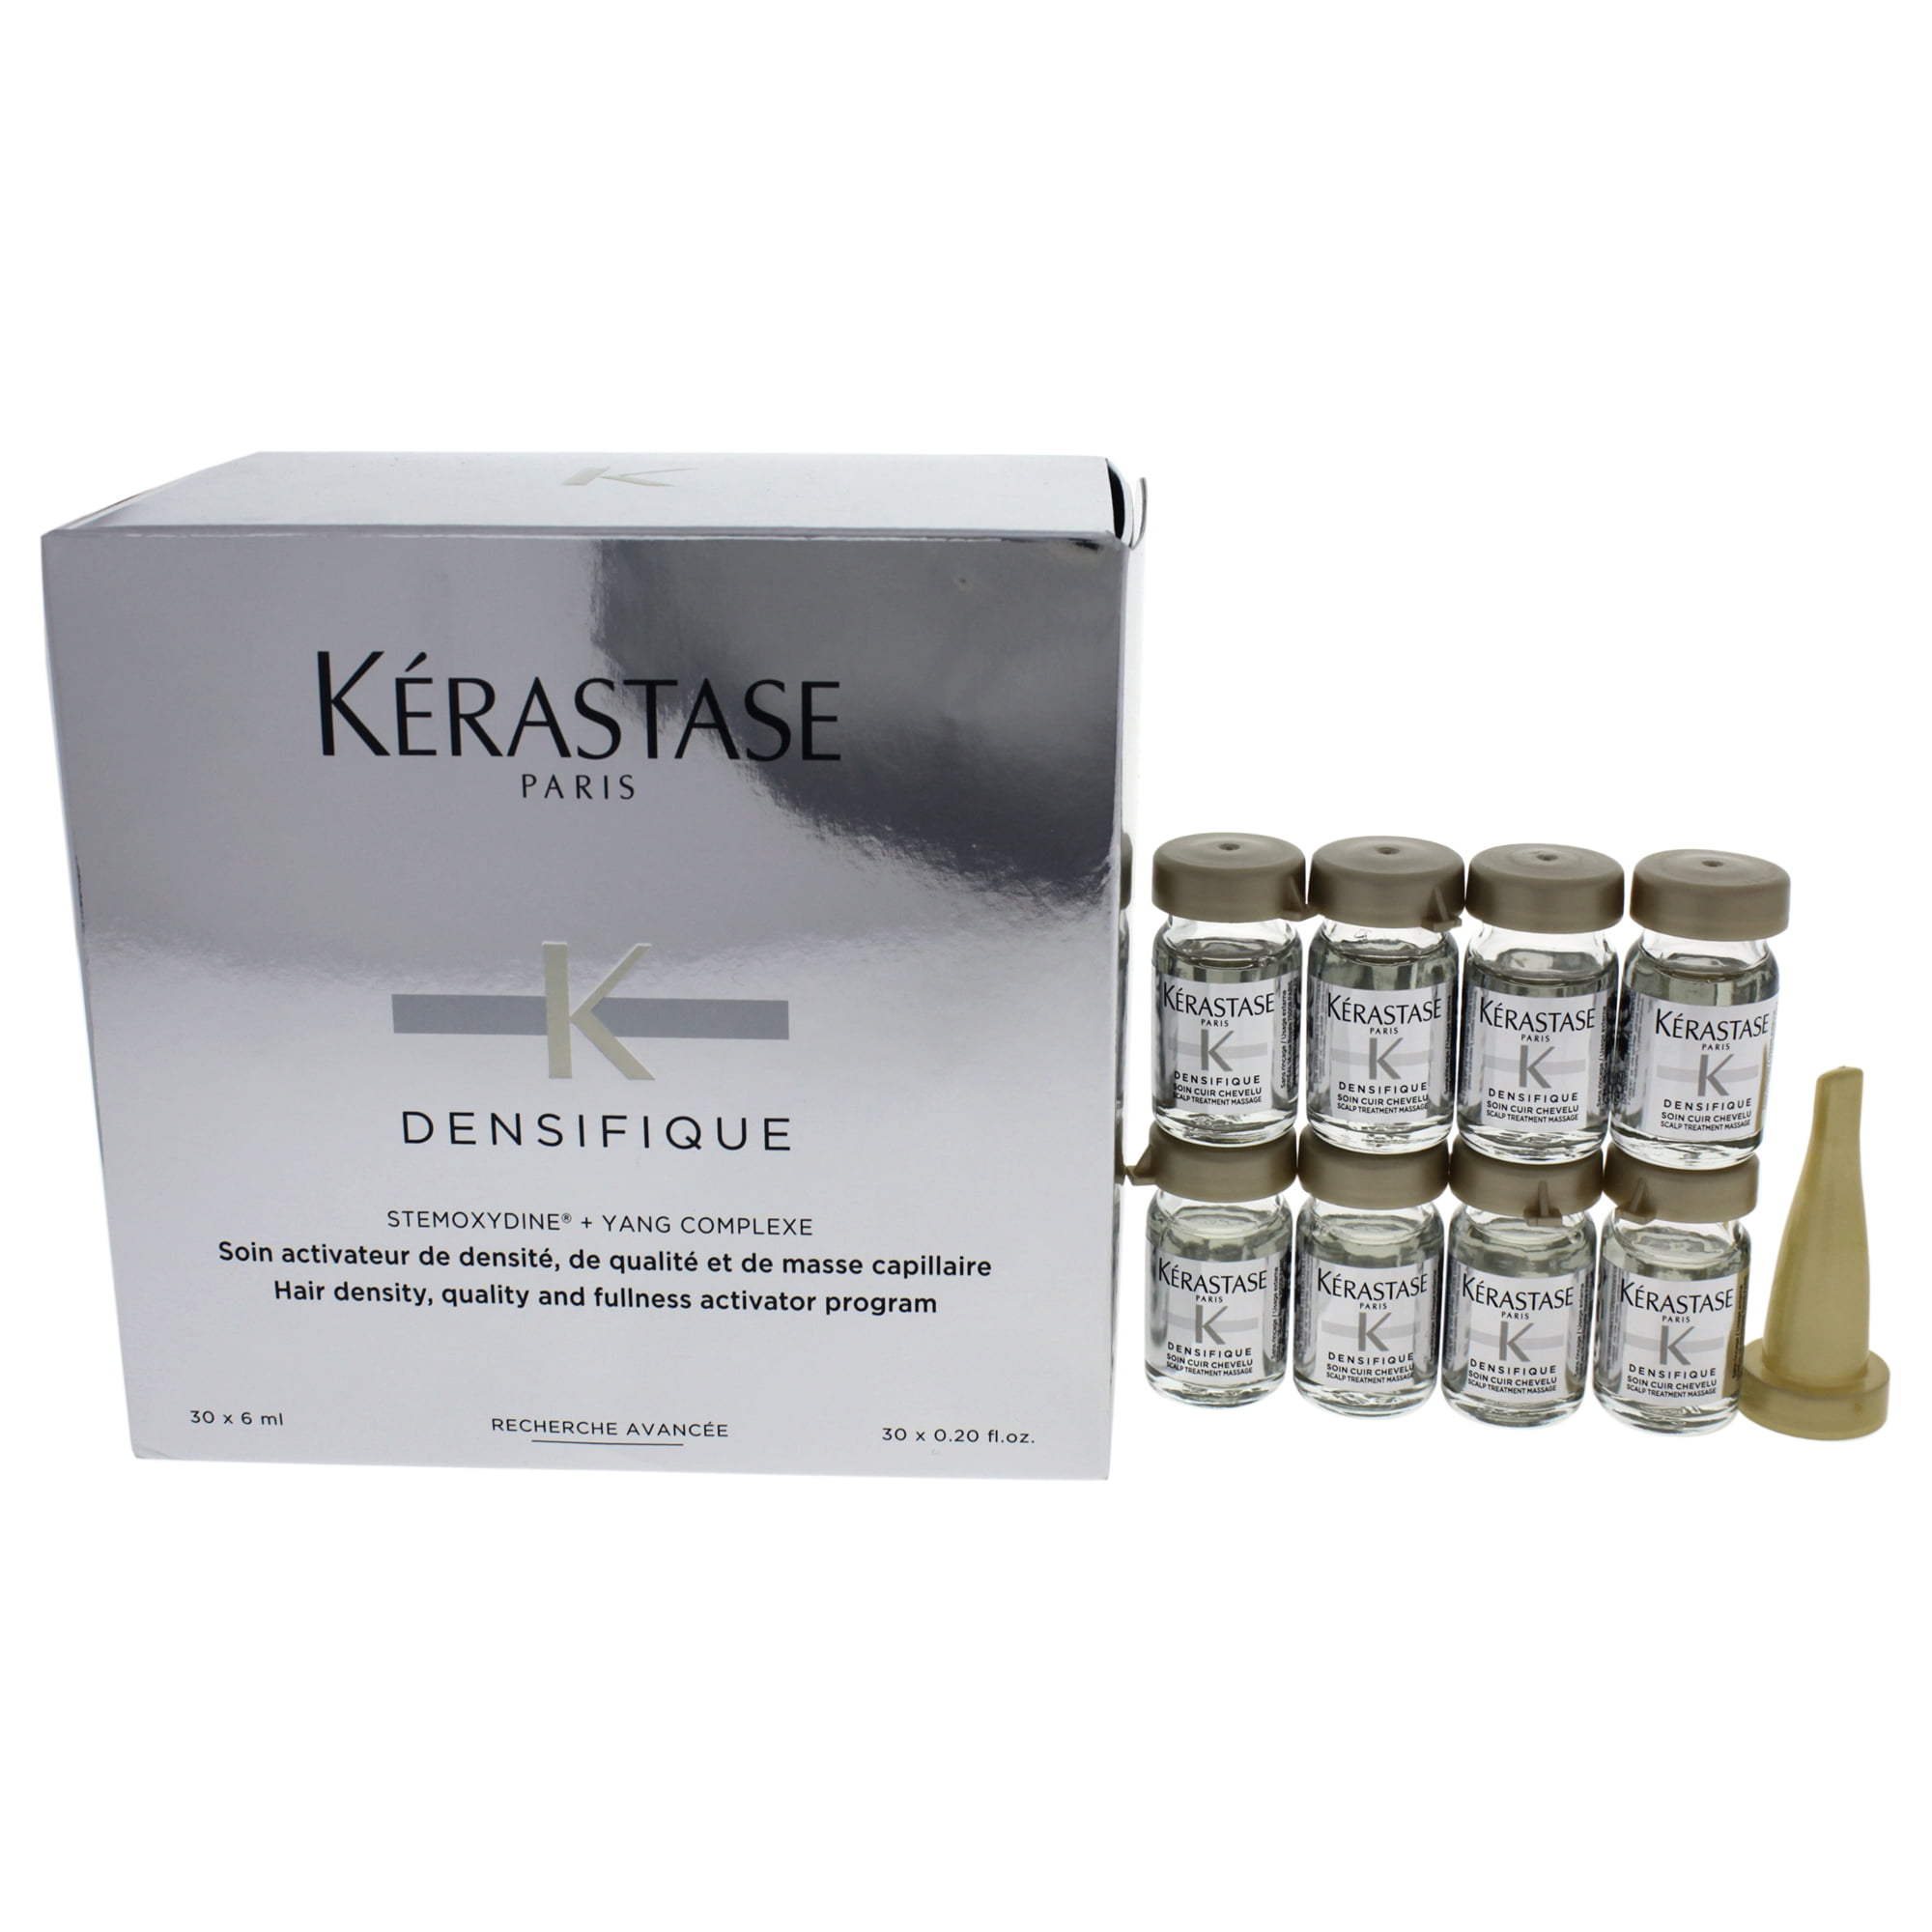 Kerastase Hair Density, Quality and Fullness Treatment, 0.20 fl oz, Travel Size, 30 Piece - Walmart.com